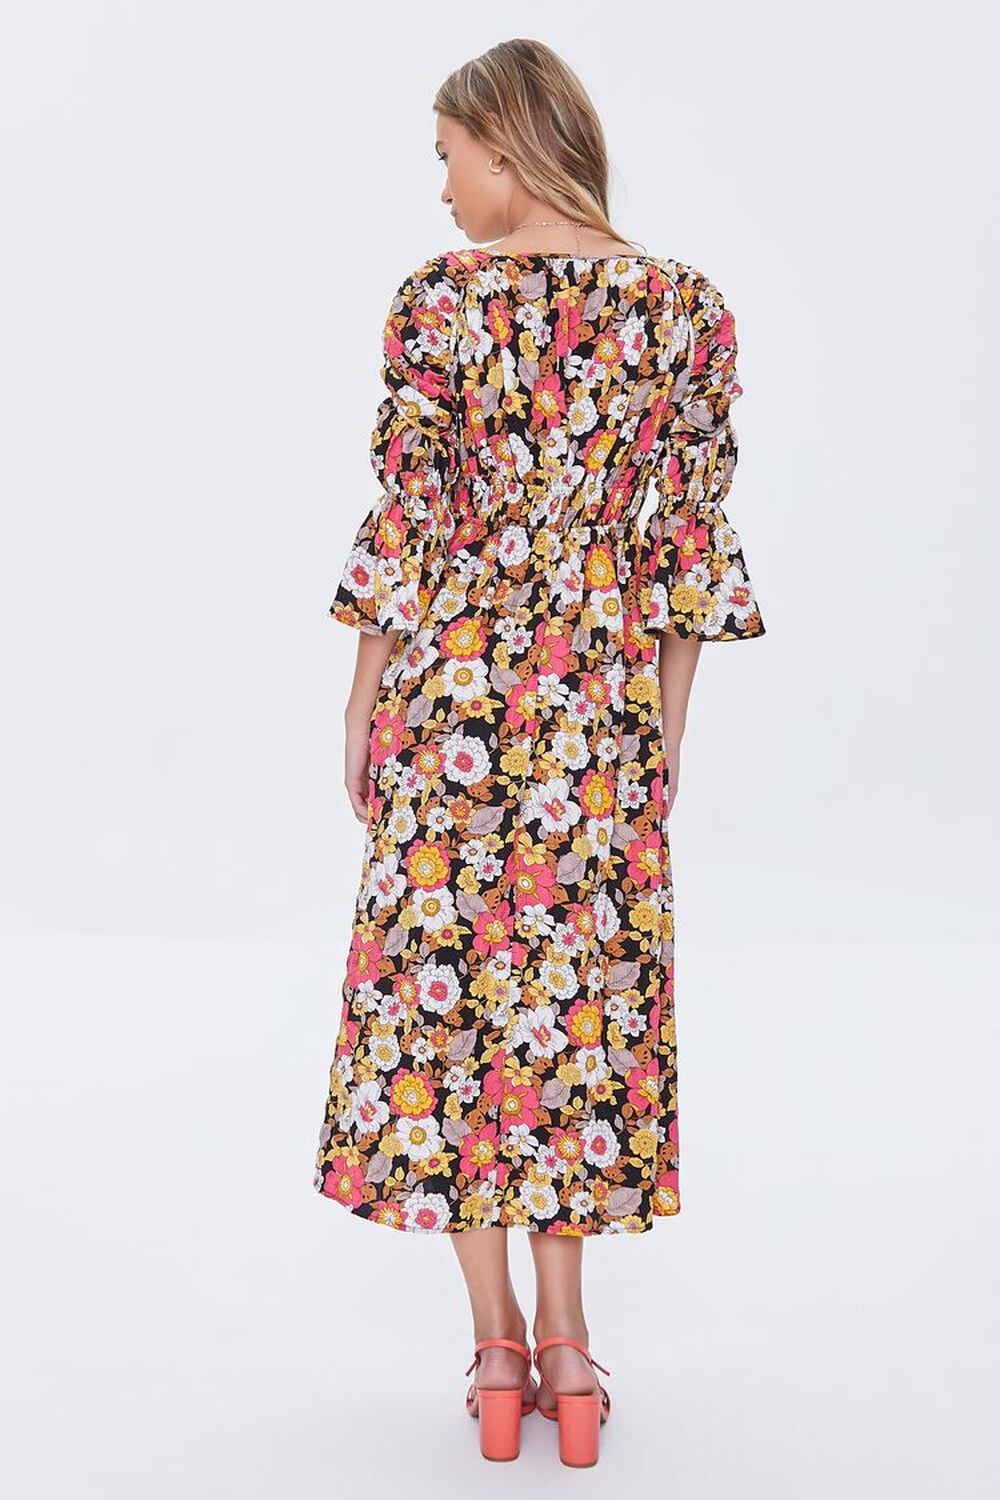 BLACK/MULTI Floral Print Bell Sleeve Dress, image 3